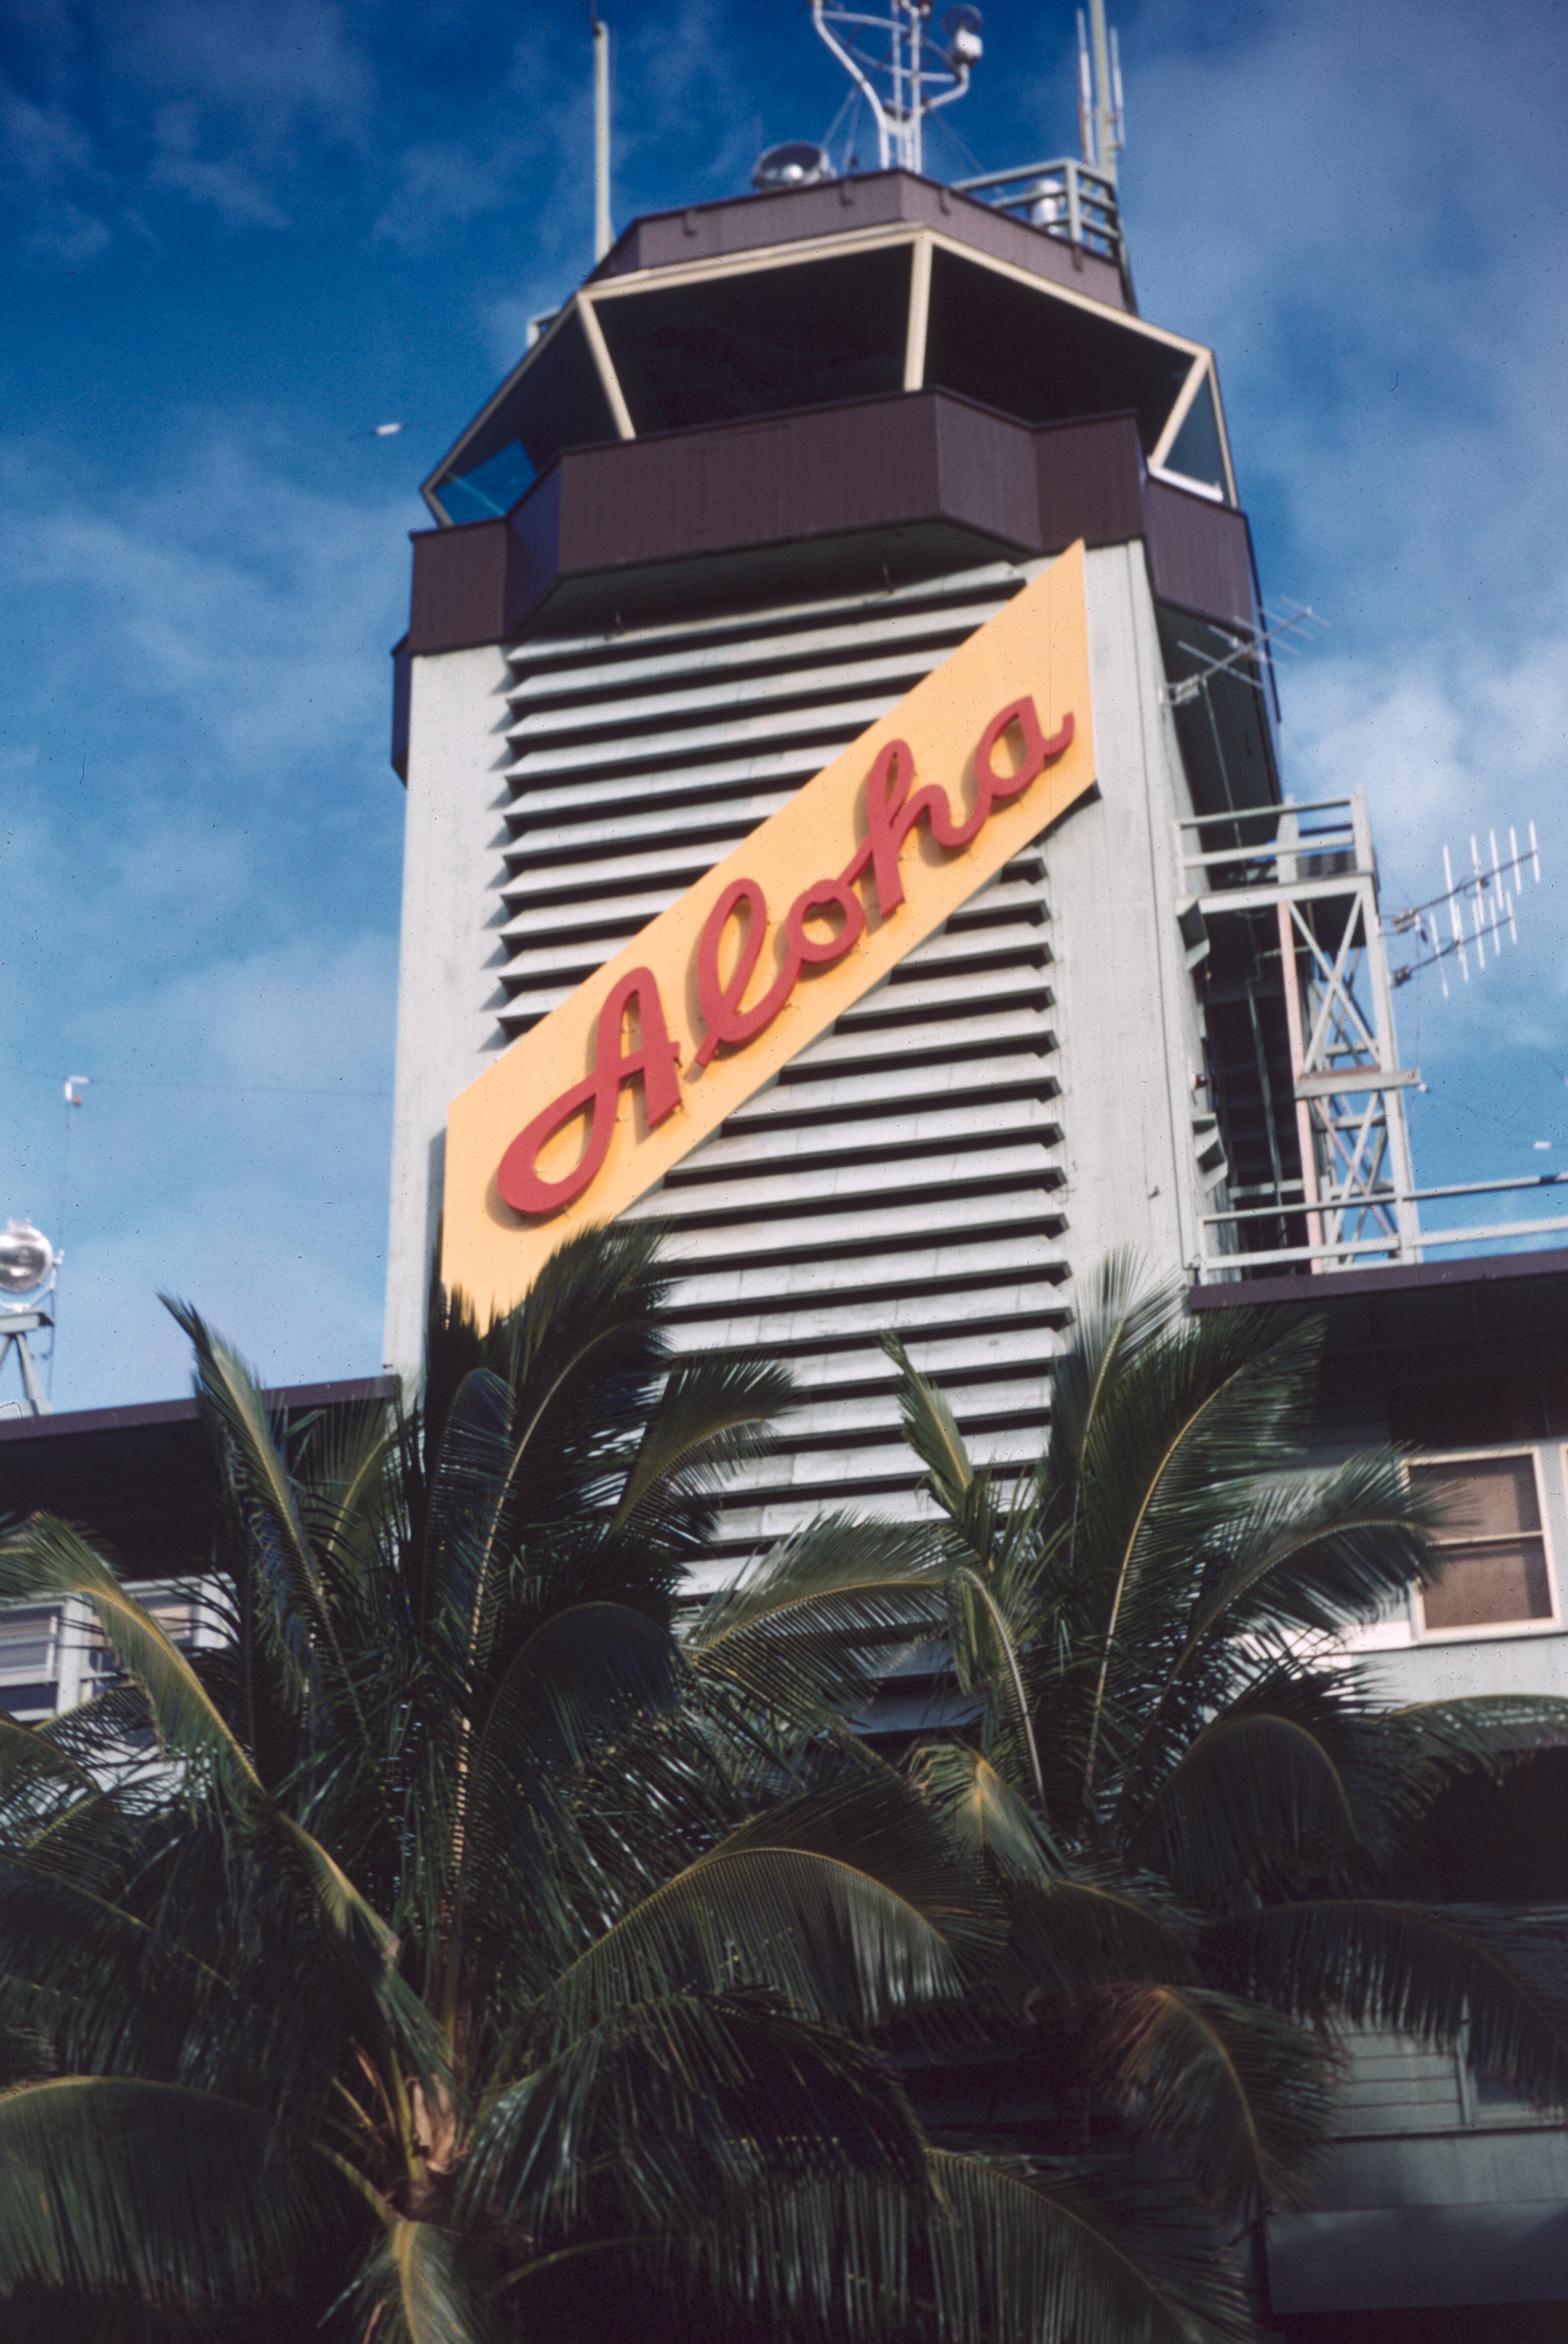 Honolulu control tower, Aug 1956